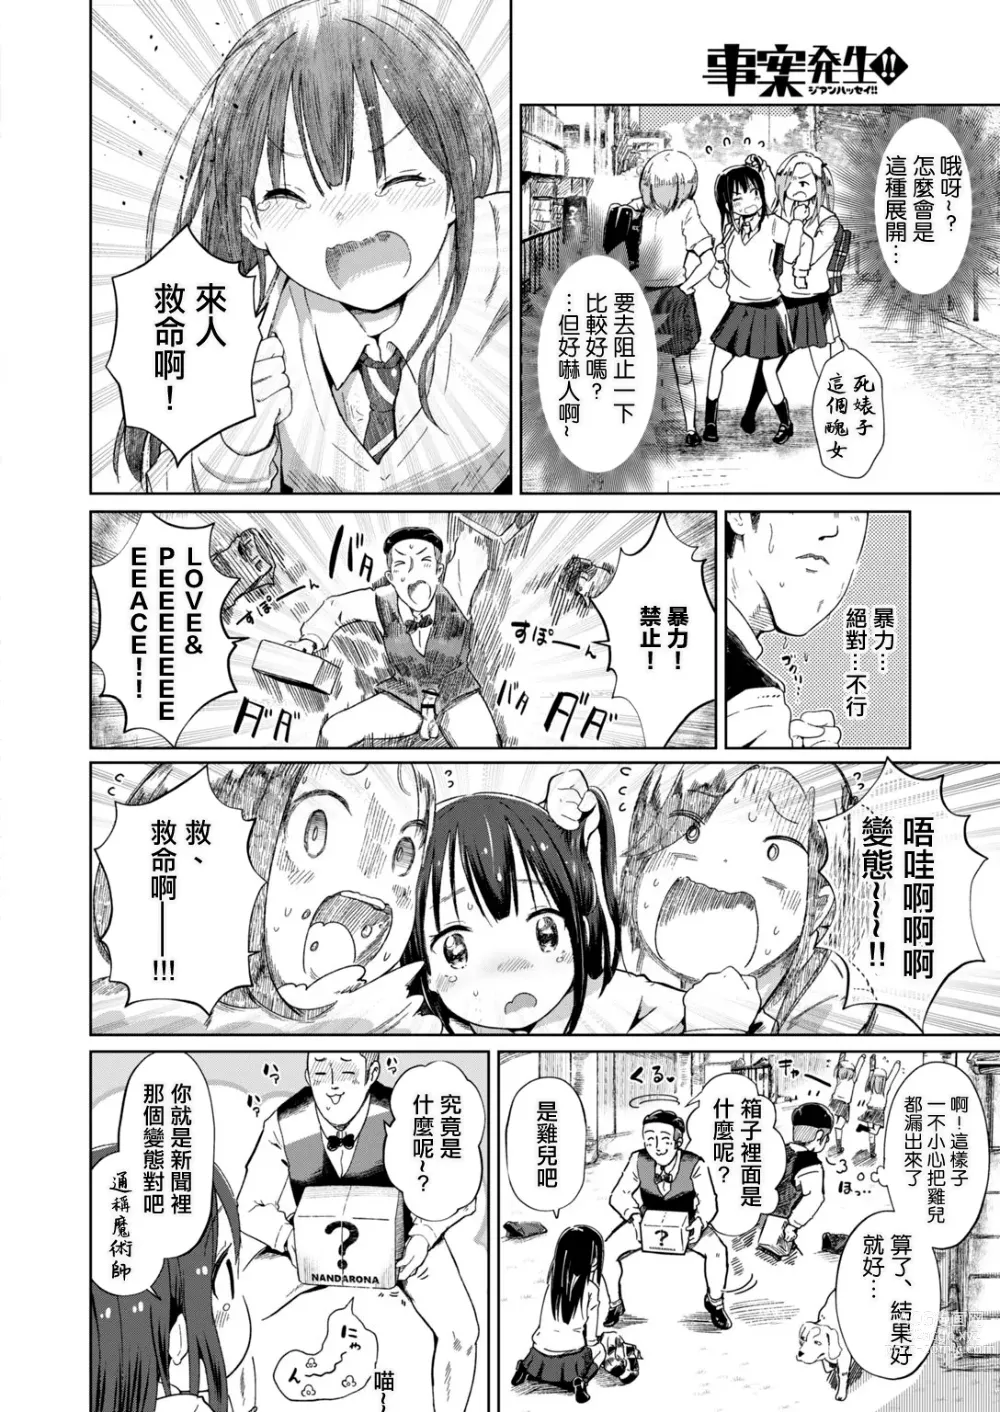 Page 8 of manga  事件發生!! ~可疑人物和箱子裡面~